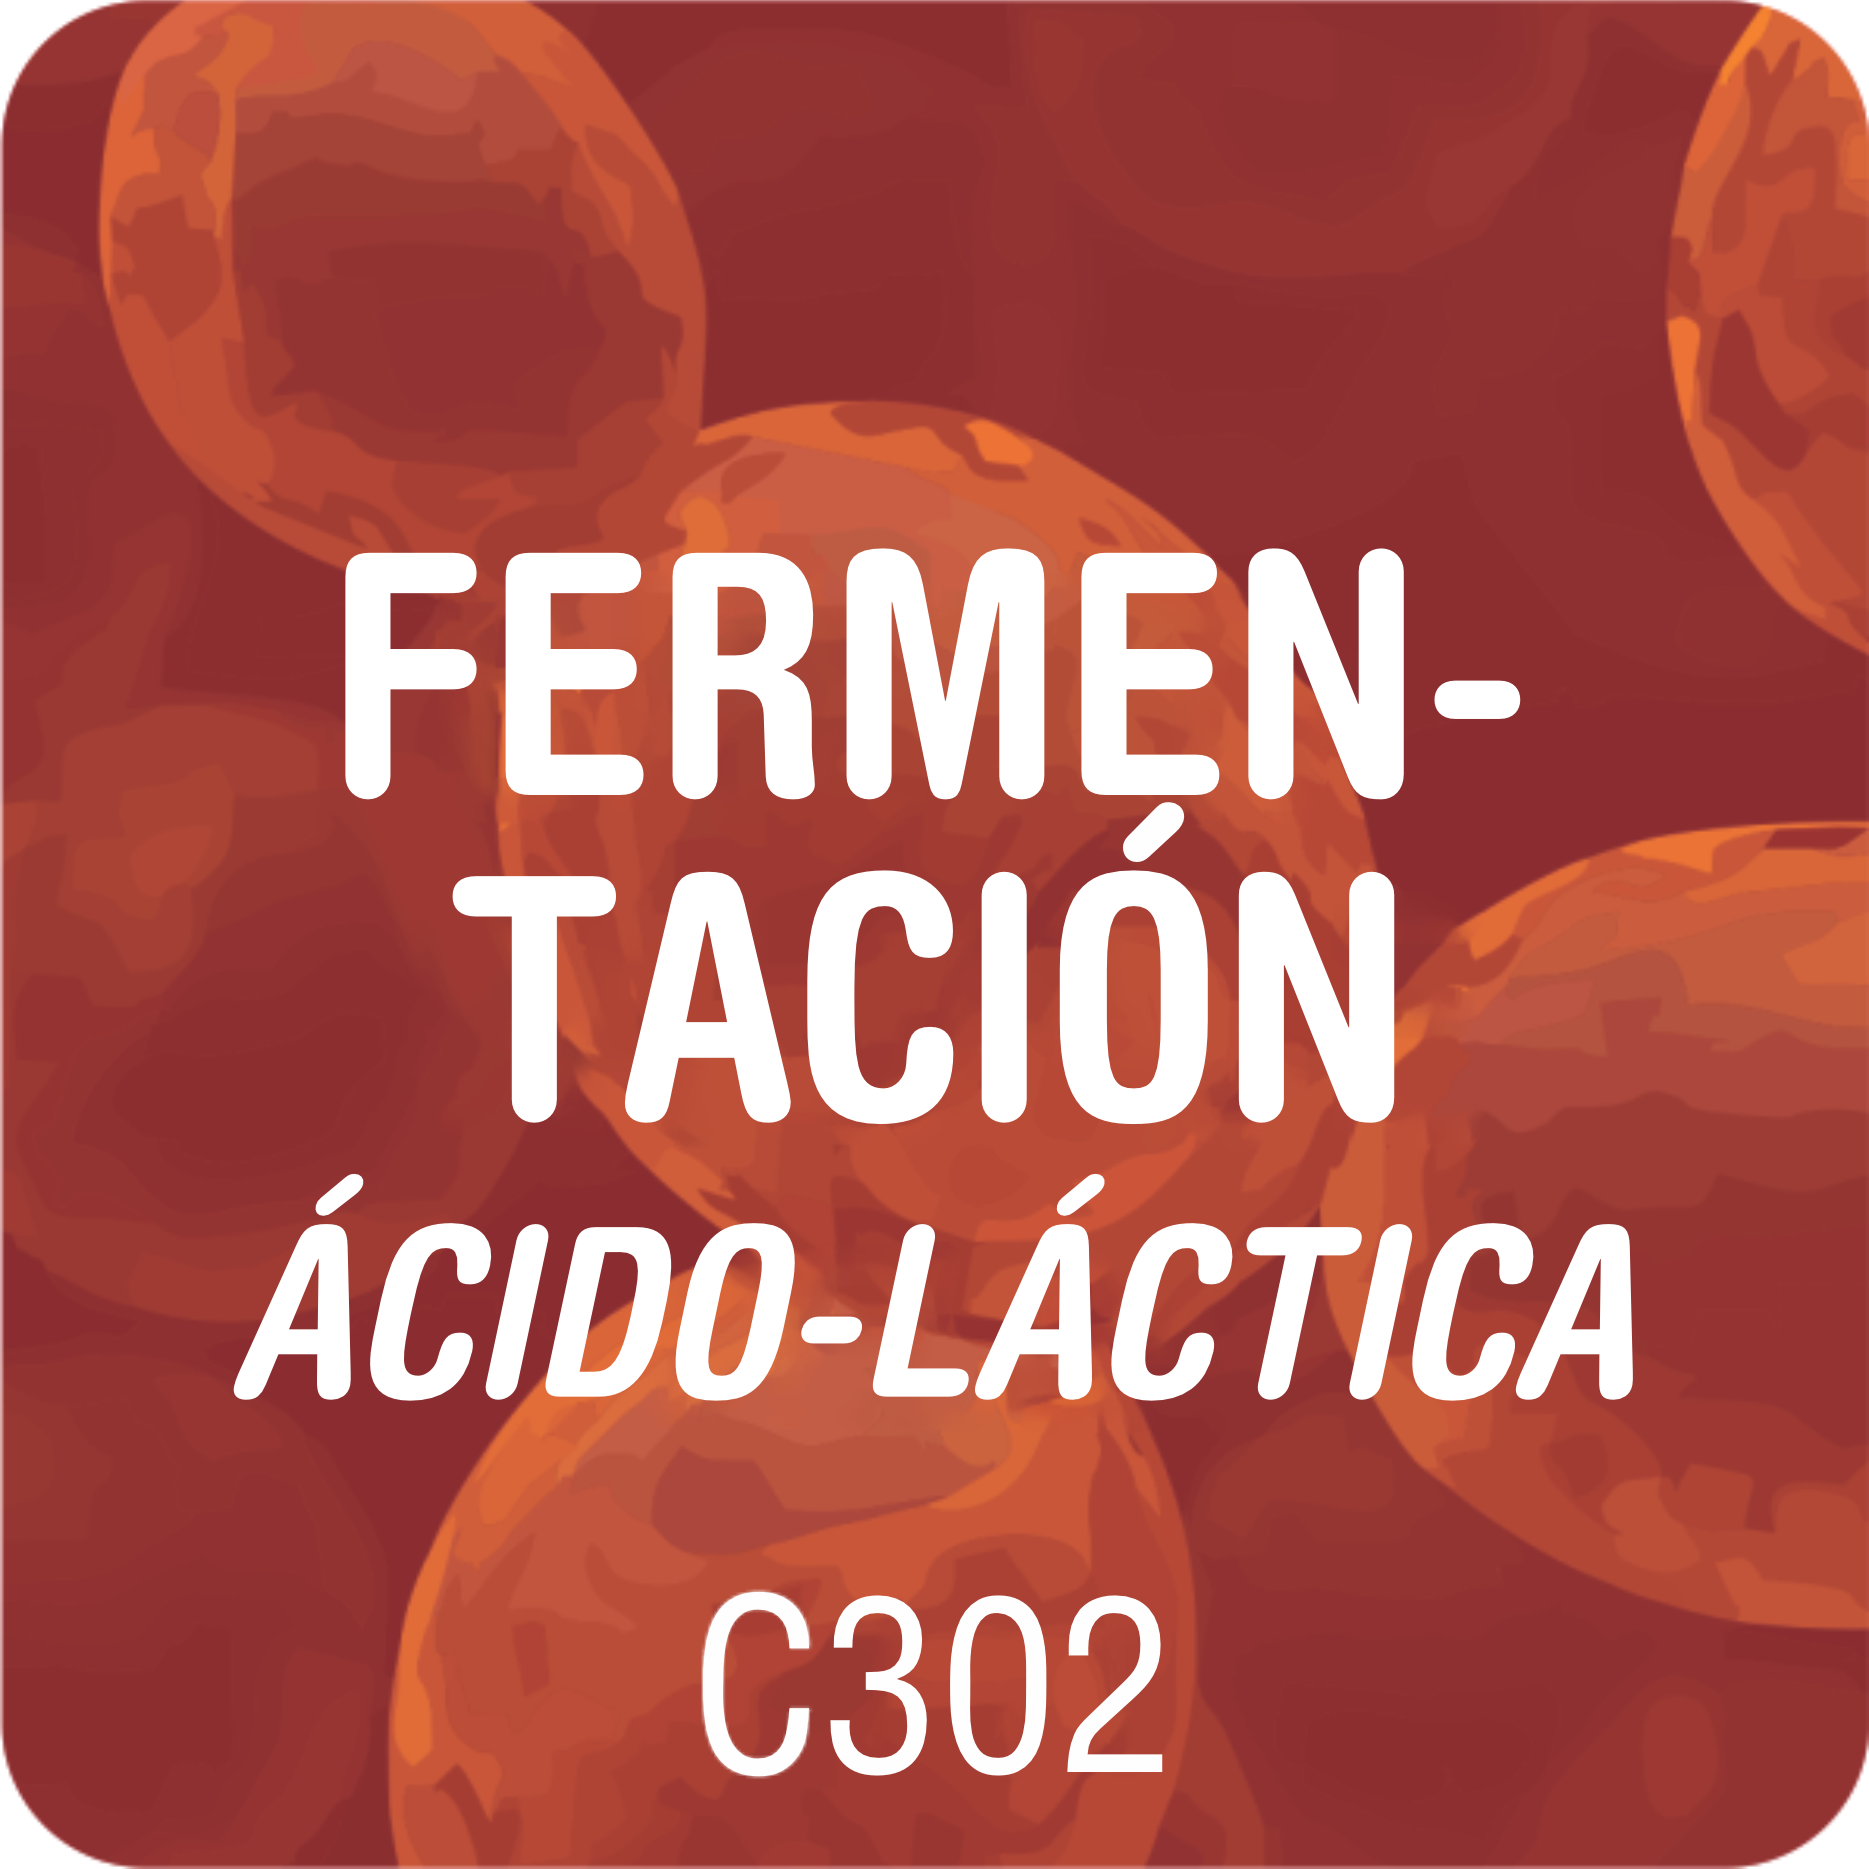 Fermentación Acido-Lactica